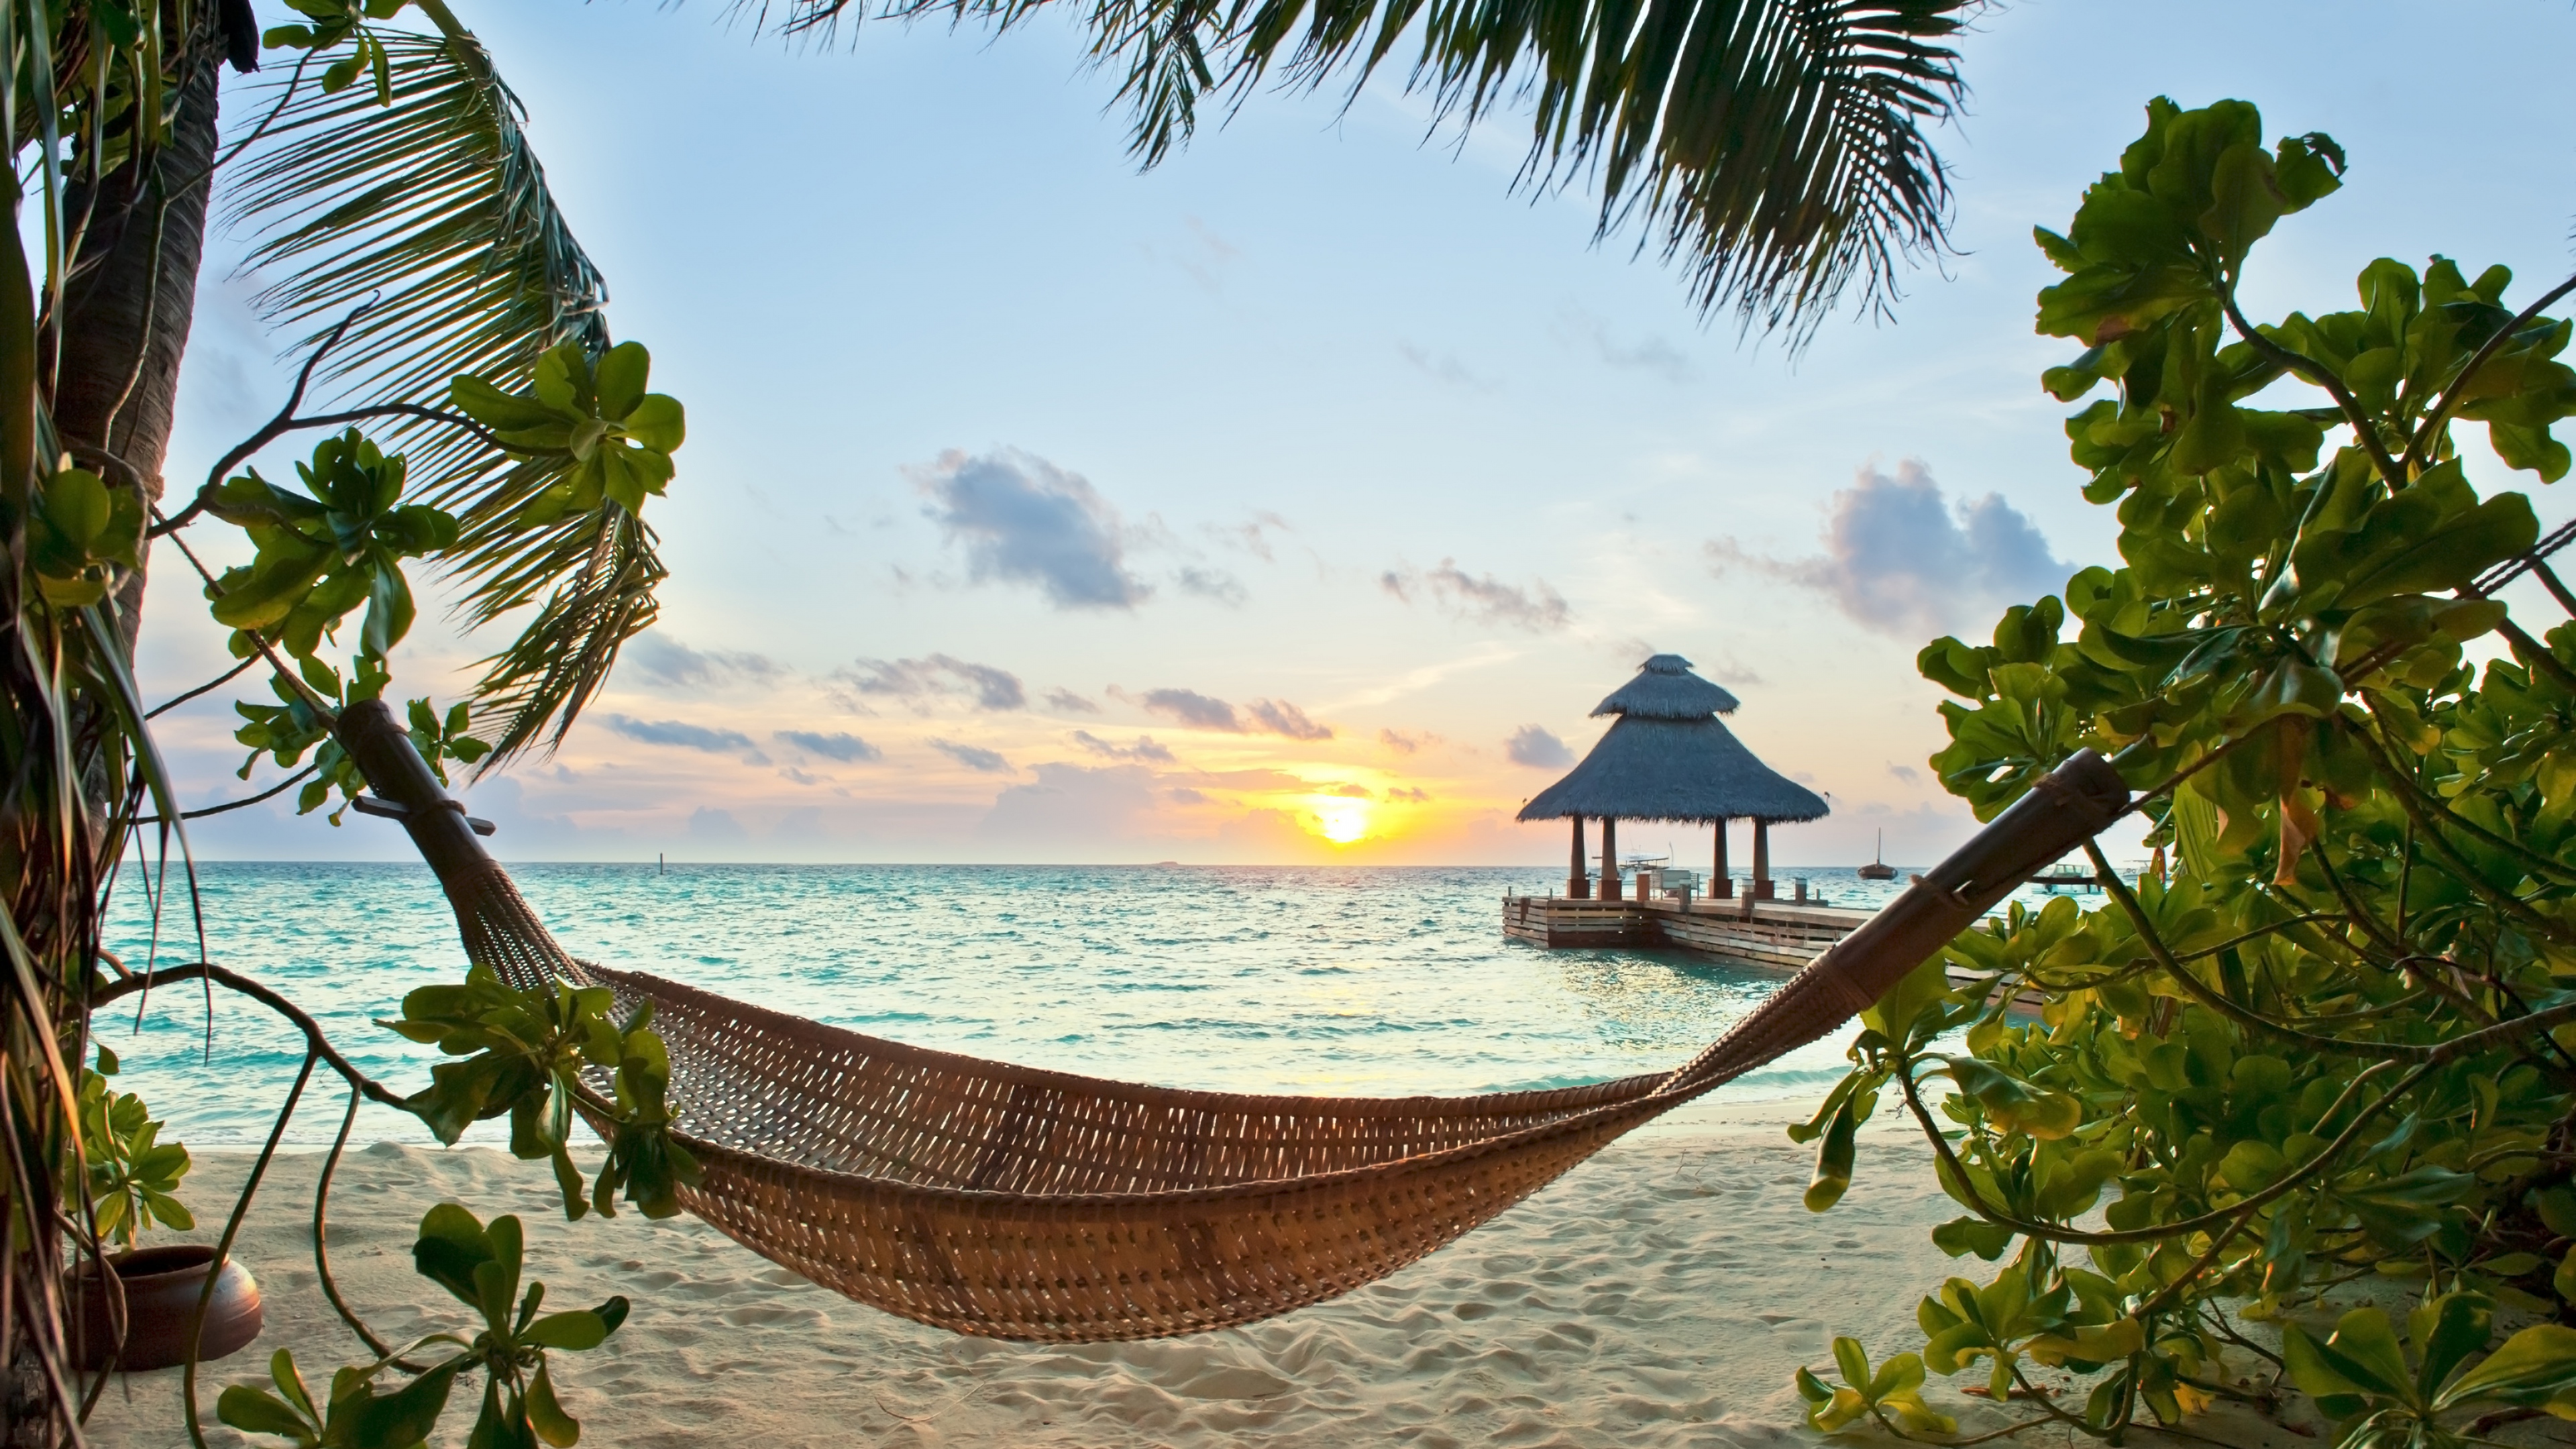 Ultra HD Wallpaper 38402160 tropics beach sand hammock holiday